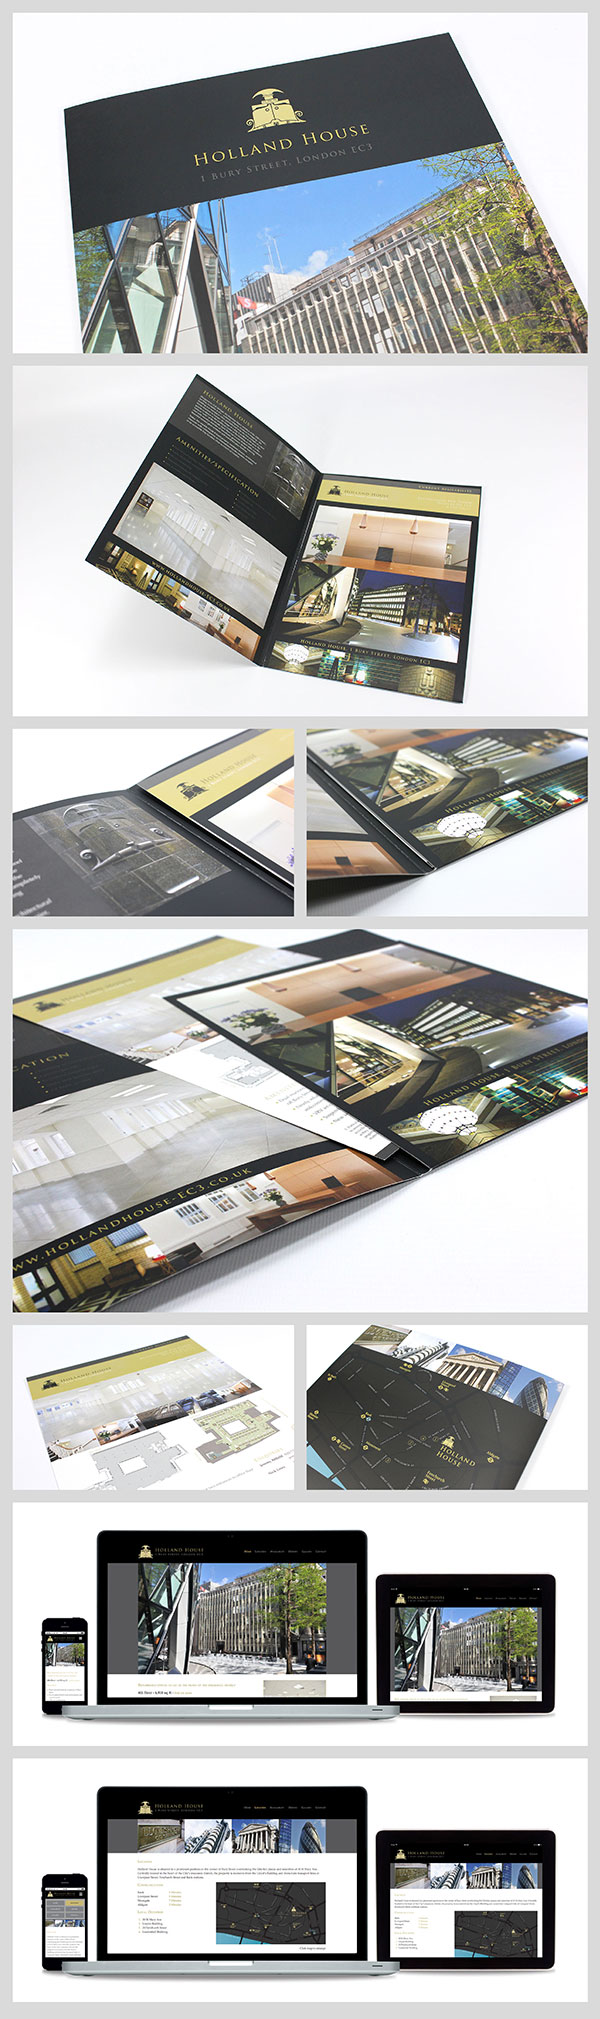 jones-lang-lasalle-property-brochure-website-holland-house-pinterest